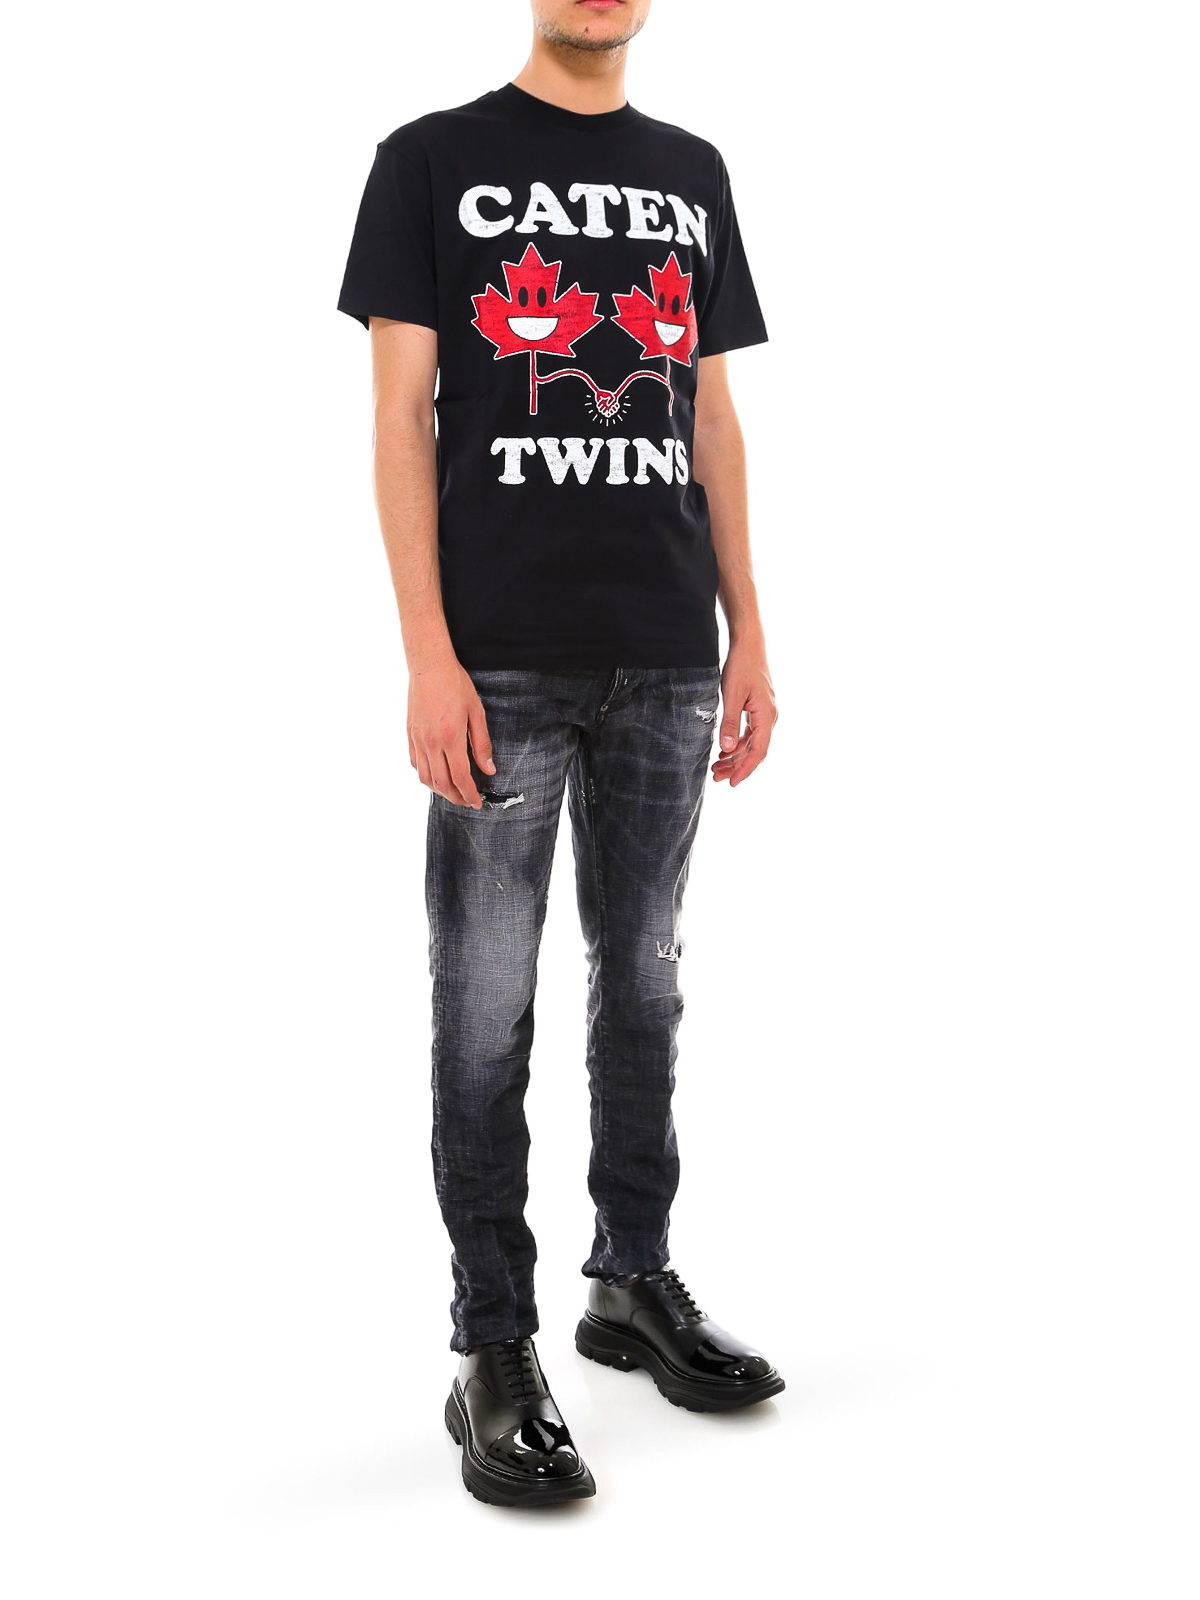 dsquared2 caten twins t shirt